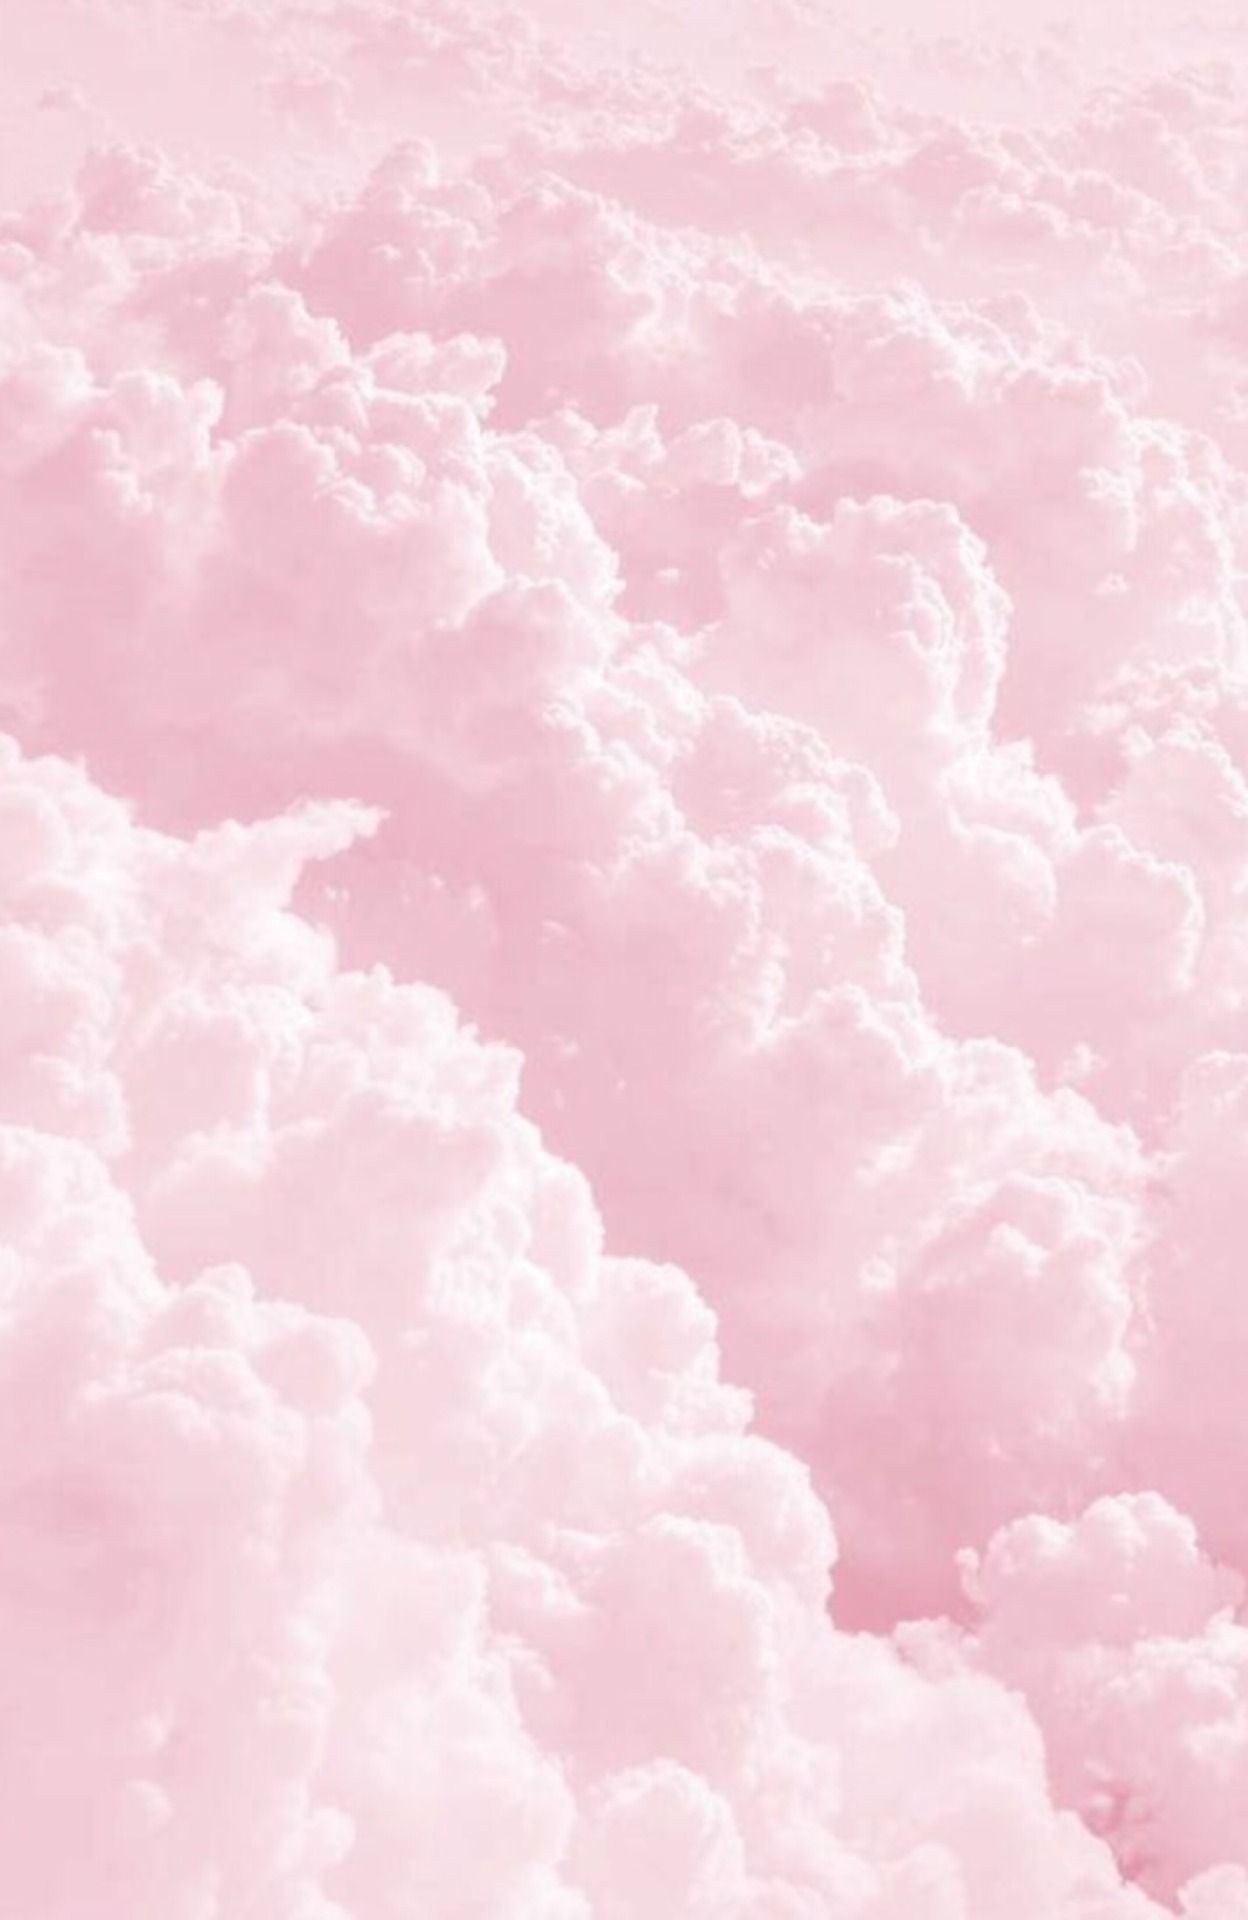 Aesthetic Cute Pink Wallpaper Online Shop, Save 51% | jlcatj.gob.mx